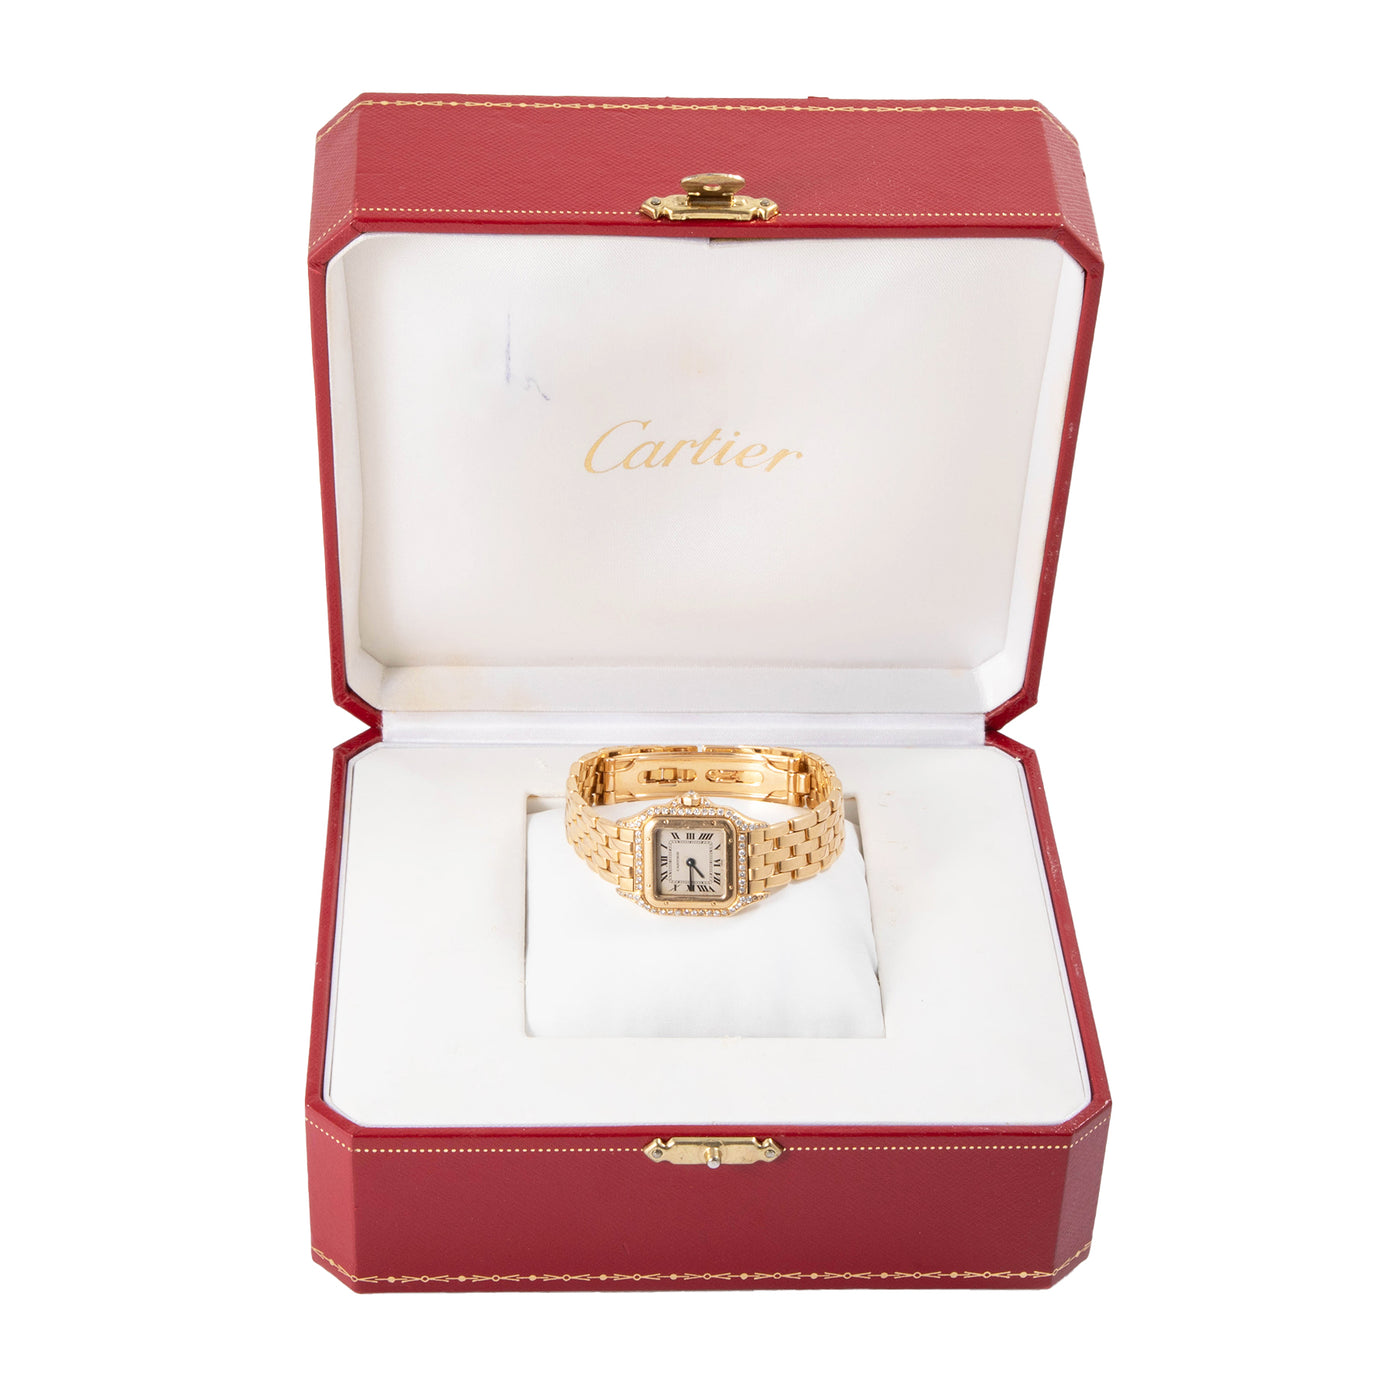 Cartier Panthere 8057917 | Timepiece360